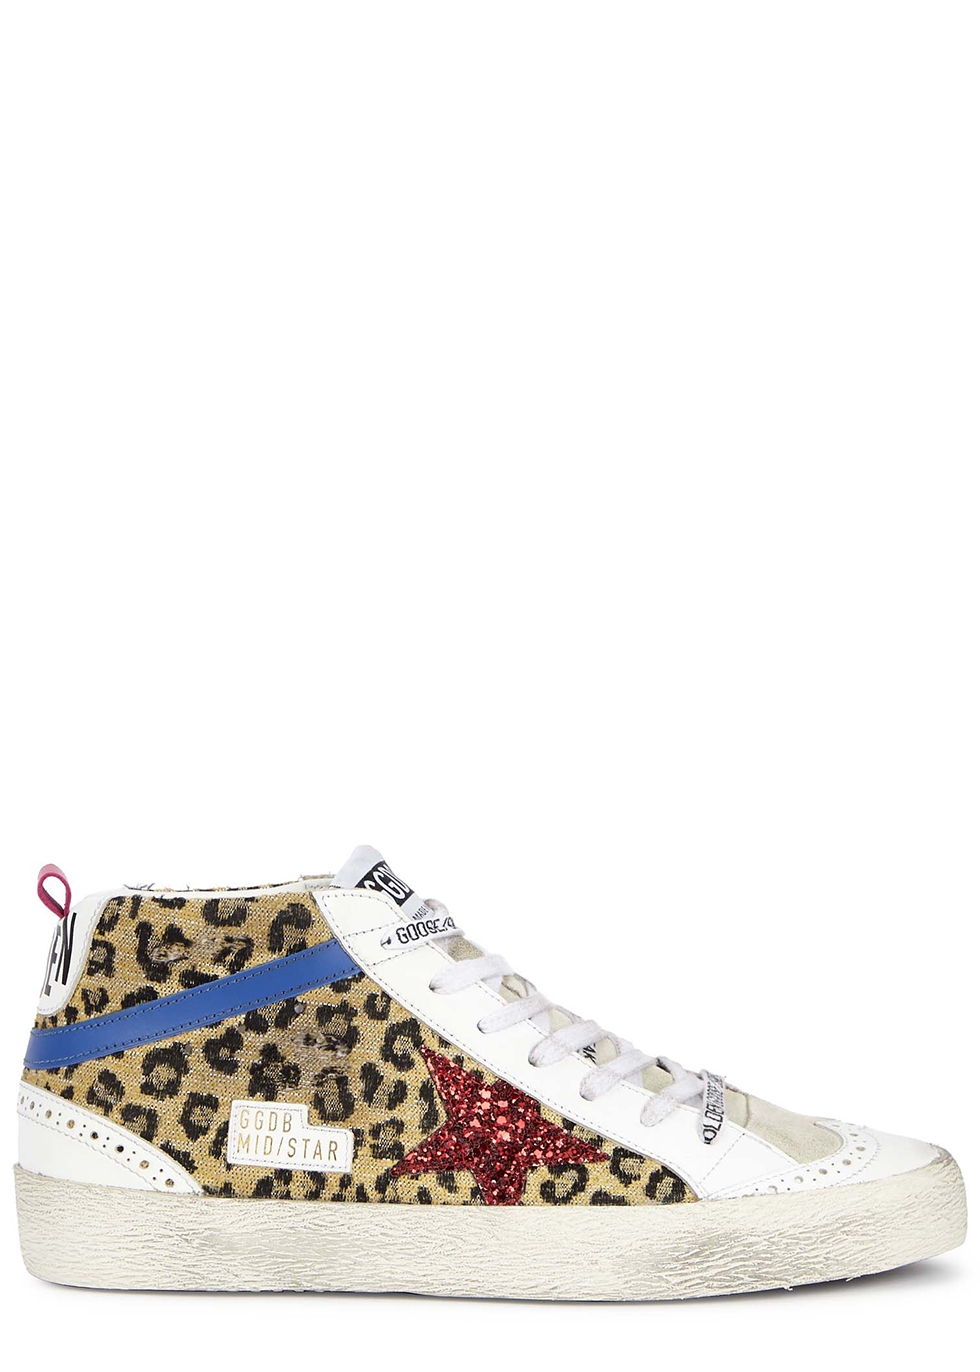 Mid Star leopard-print distressed sneakers